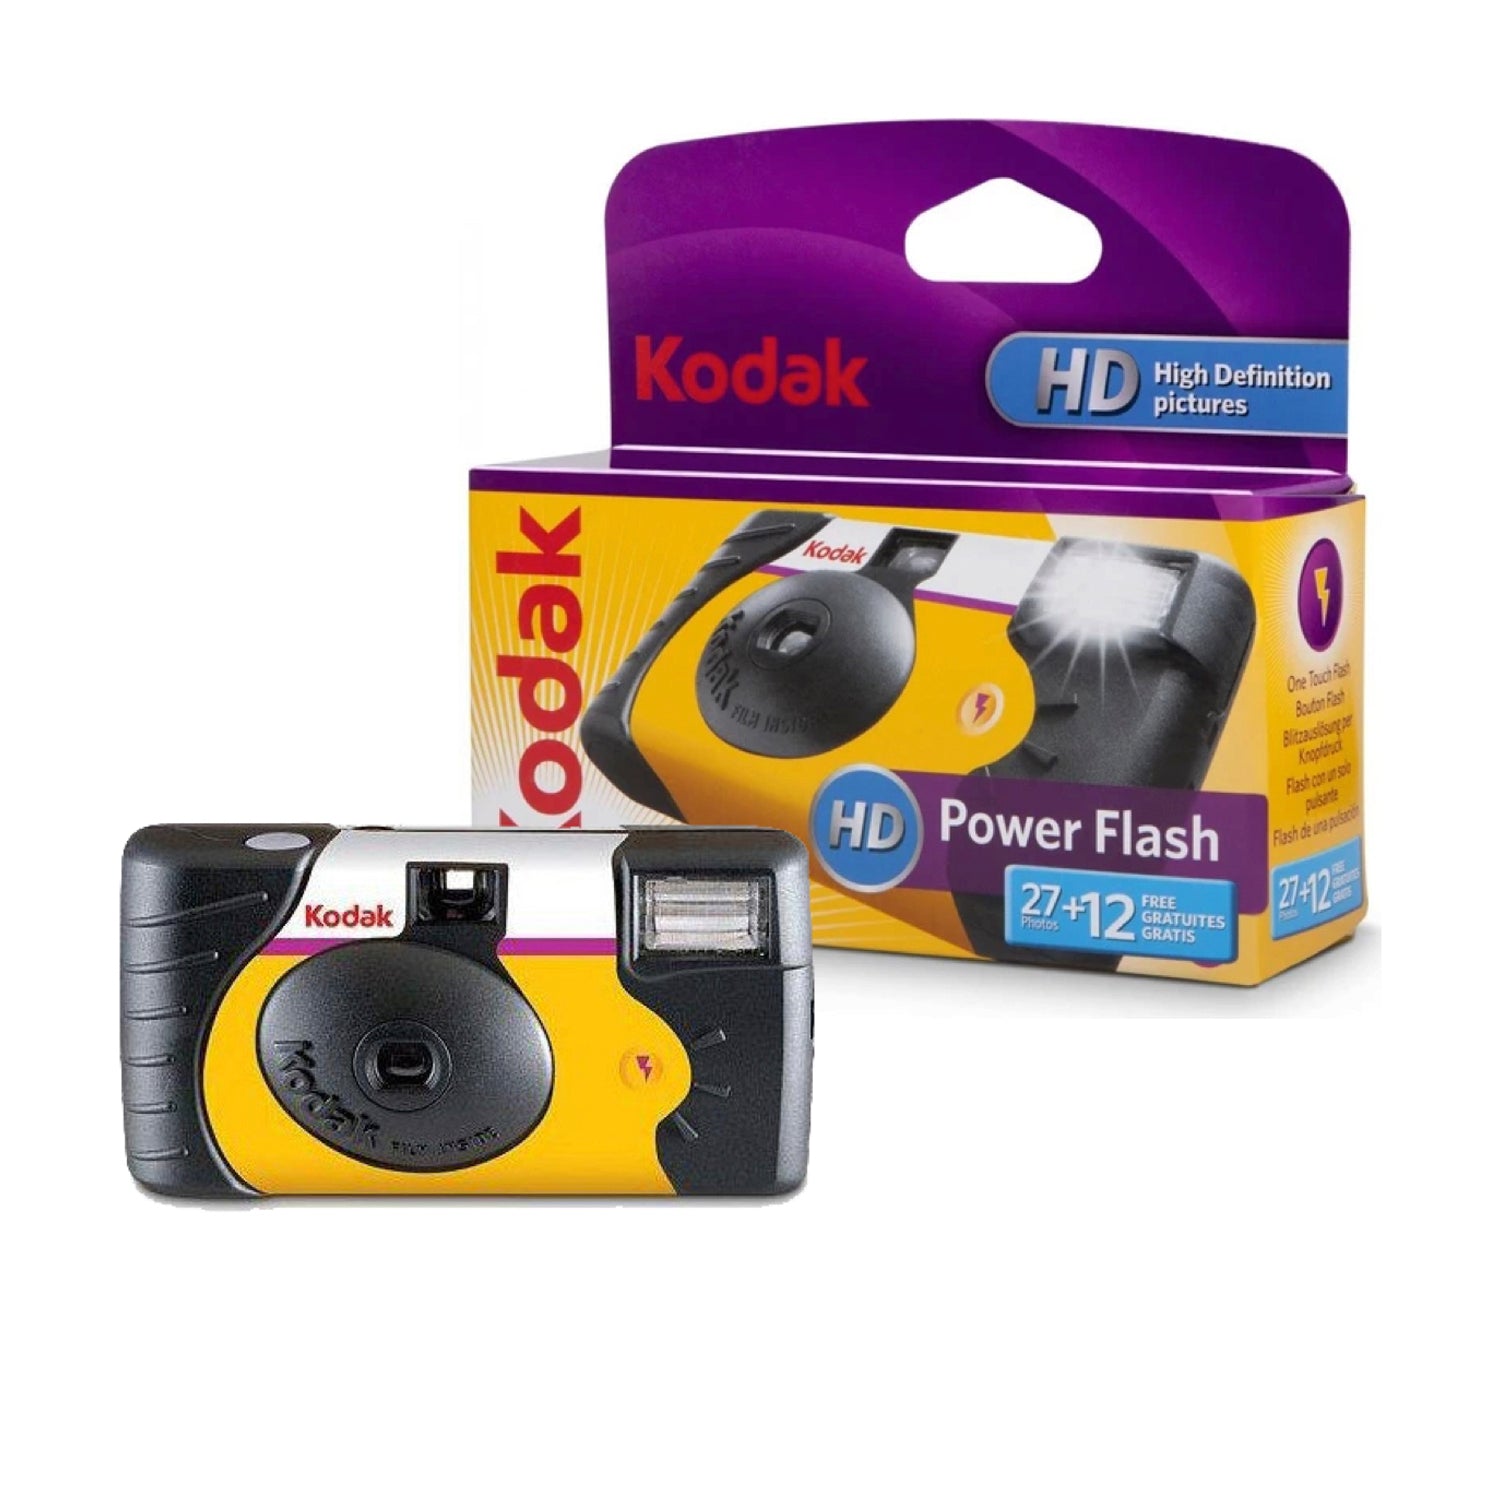 Kodak Power Flash 27 photos + 12 free